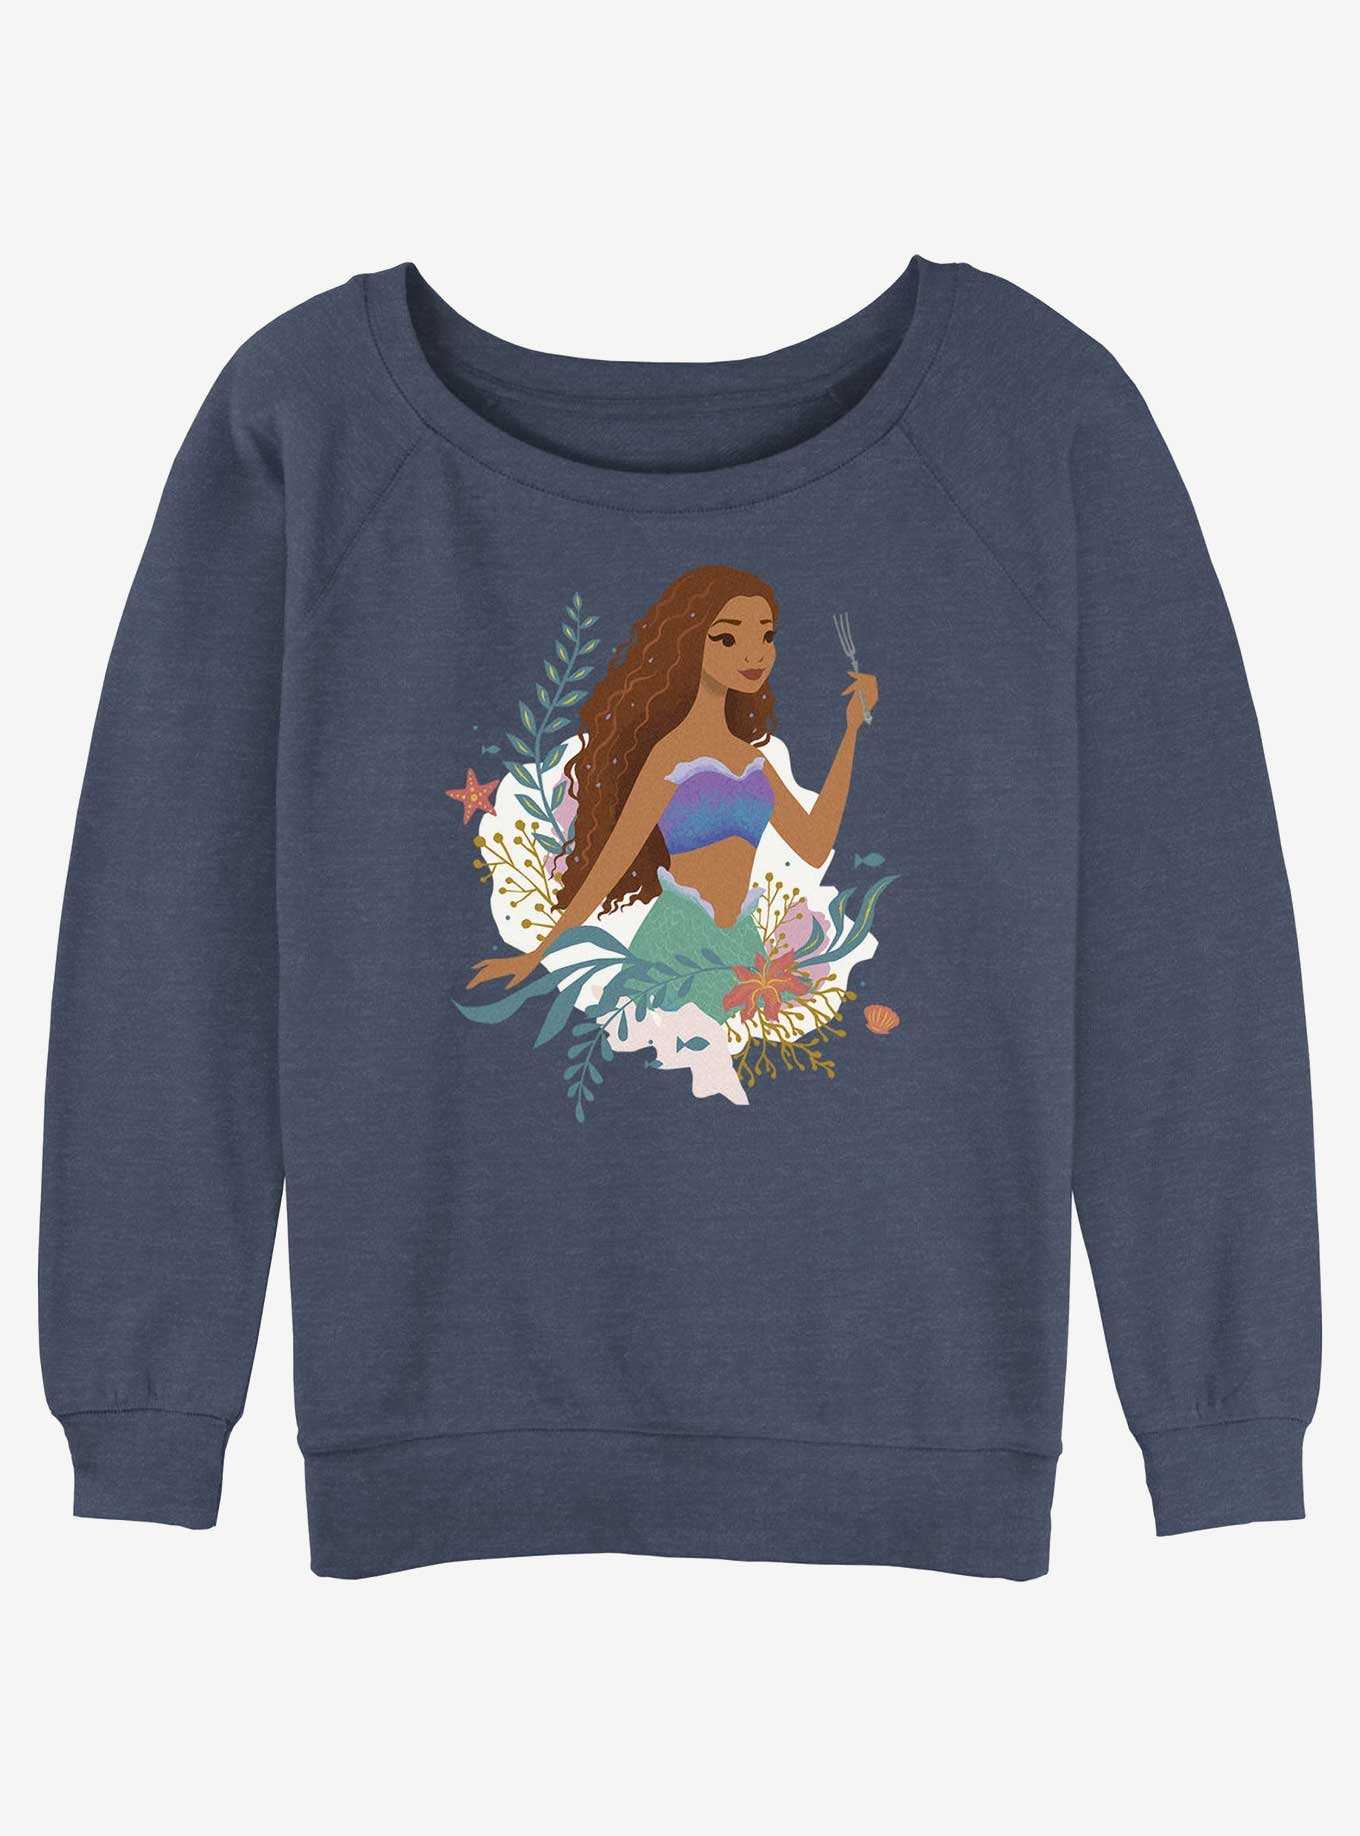 Disney The Little Mermaid Ariel With The Dinglehopper Girls Slouchy Sweatshirt, , hi-res